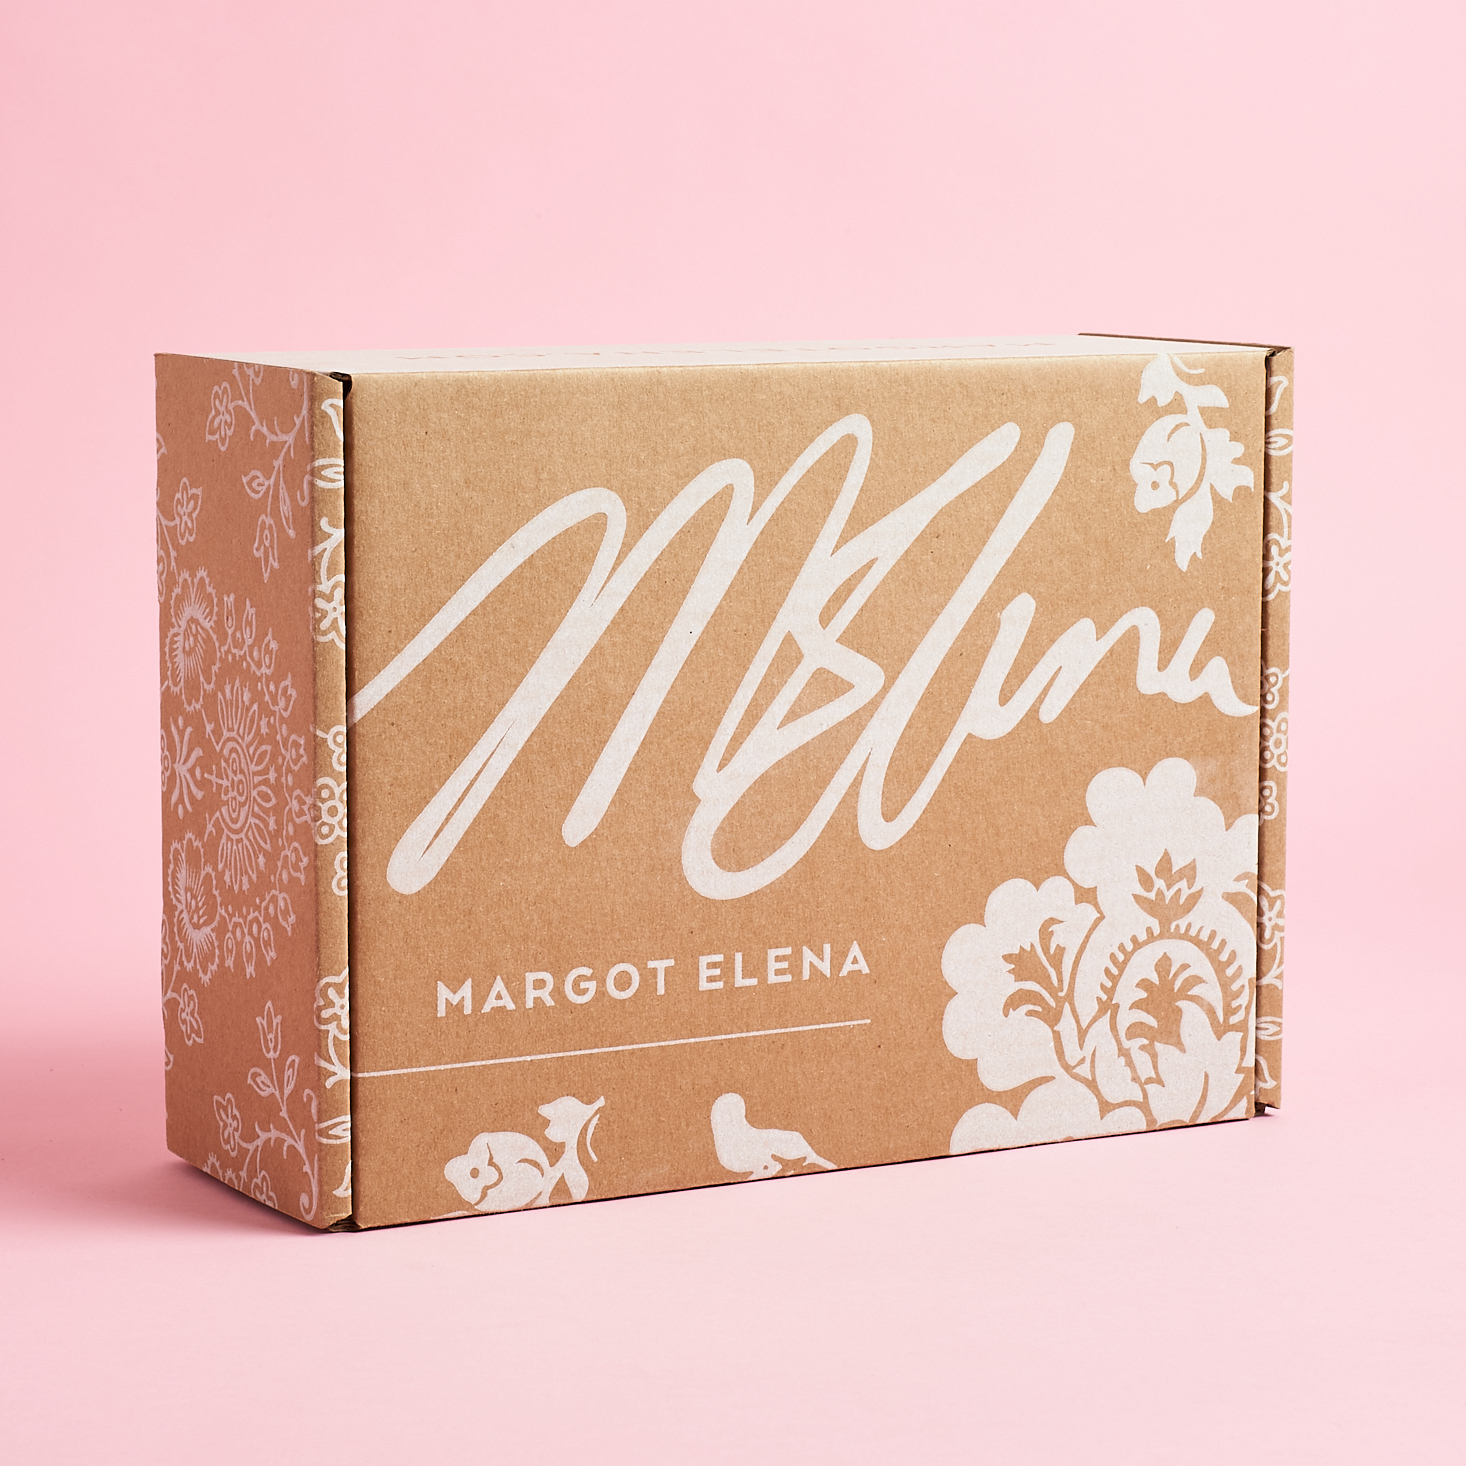 Margot Elena Subscription Box Review – Spring 2020